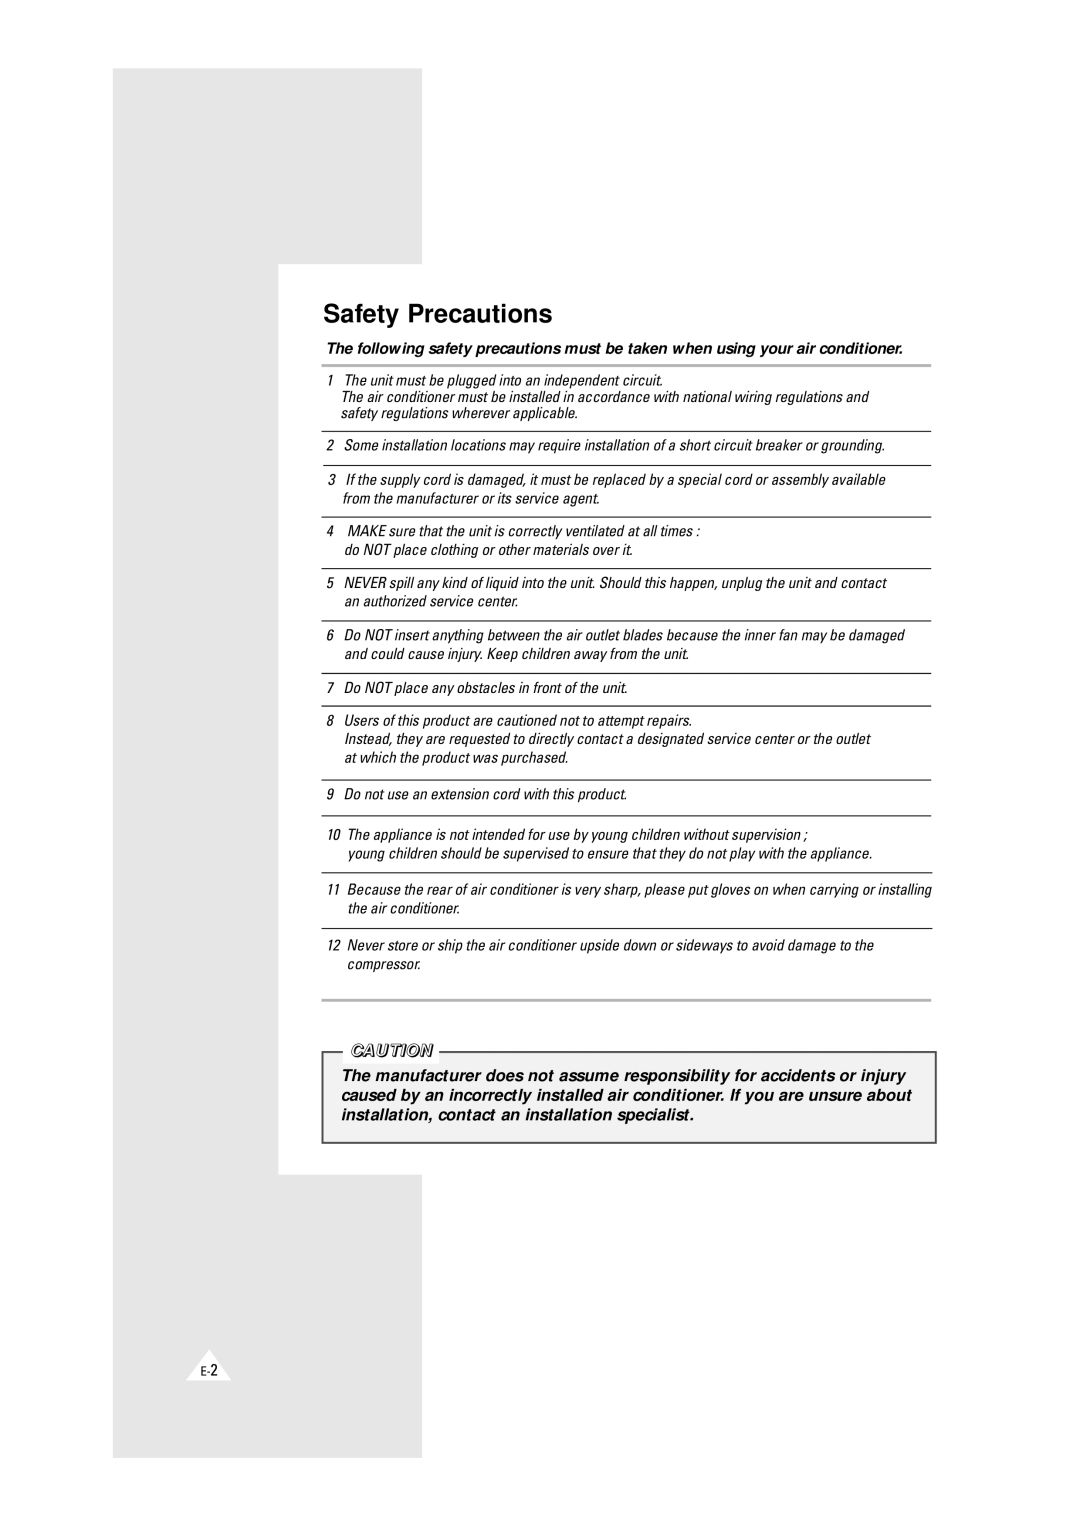 Samsung AW0610A, AW0510D, AW0510B, AW0510A, AW0600 manual Safety Precautions 